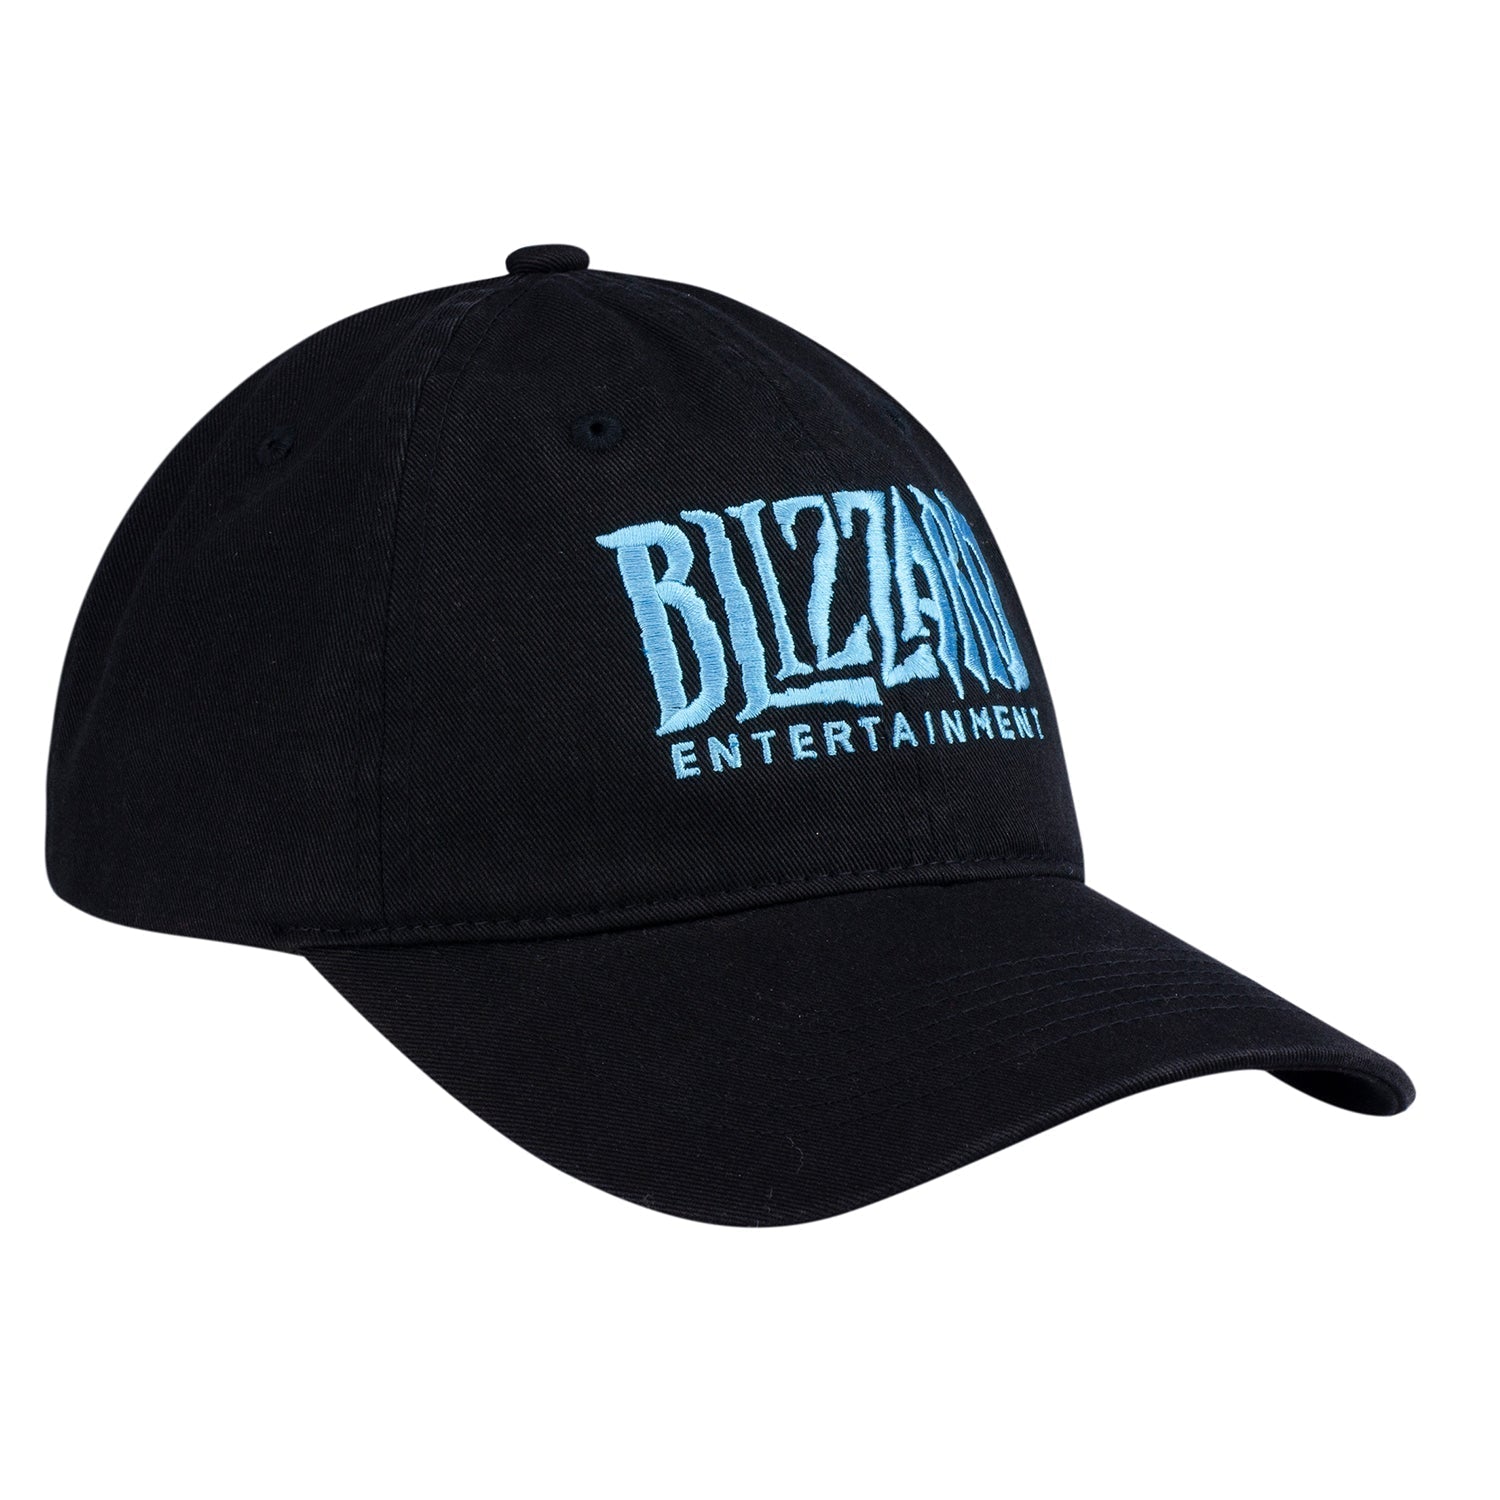 Blizzard Entertainment Black Dad Hat - Right View